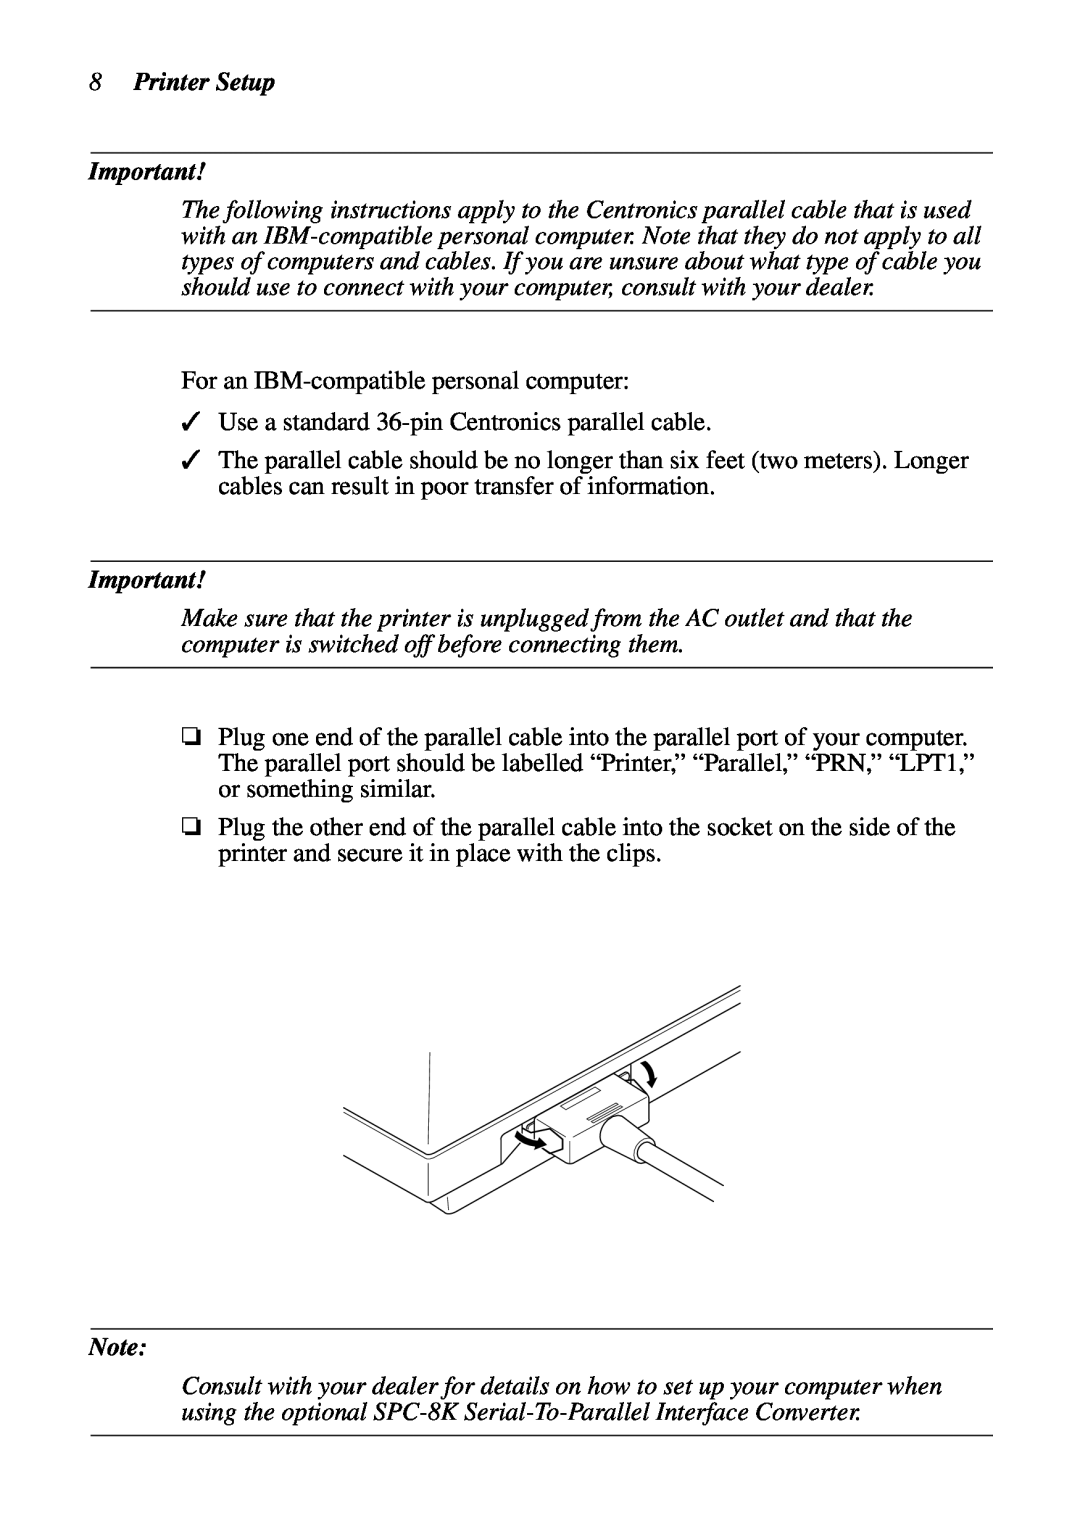 Star Micronics NX-2460C user manual Printer Setup 